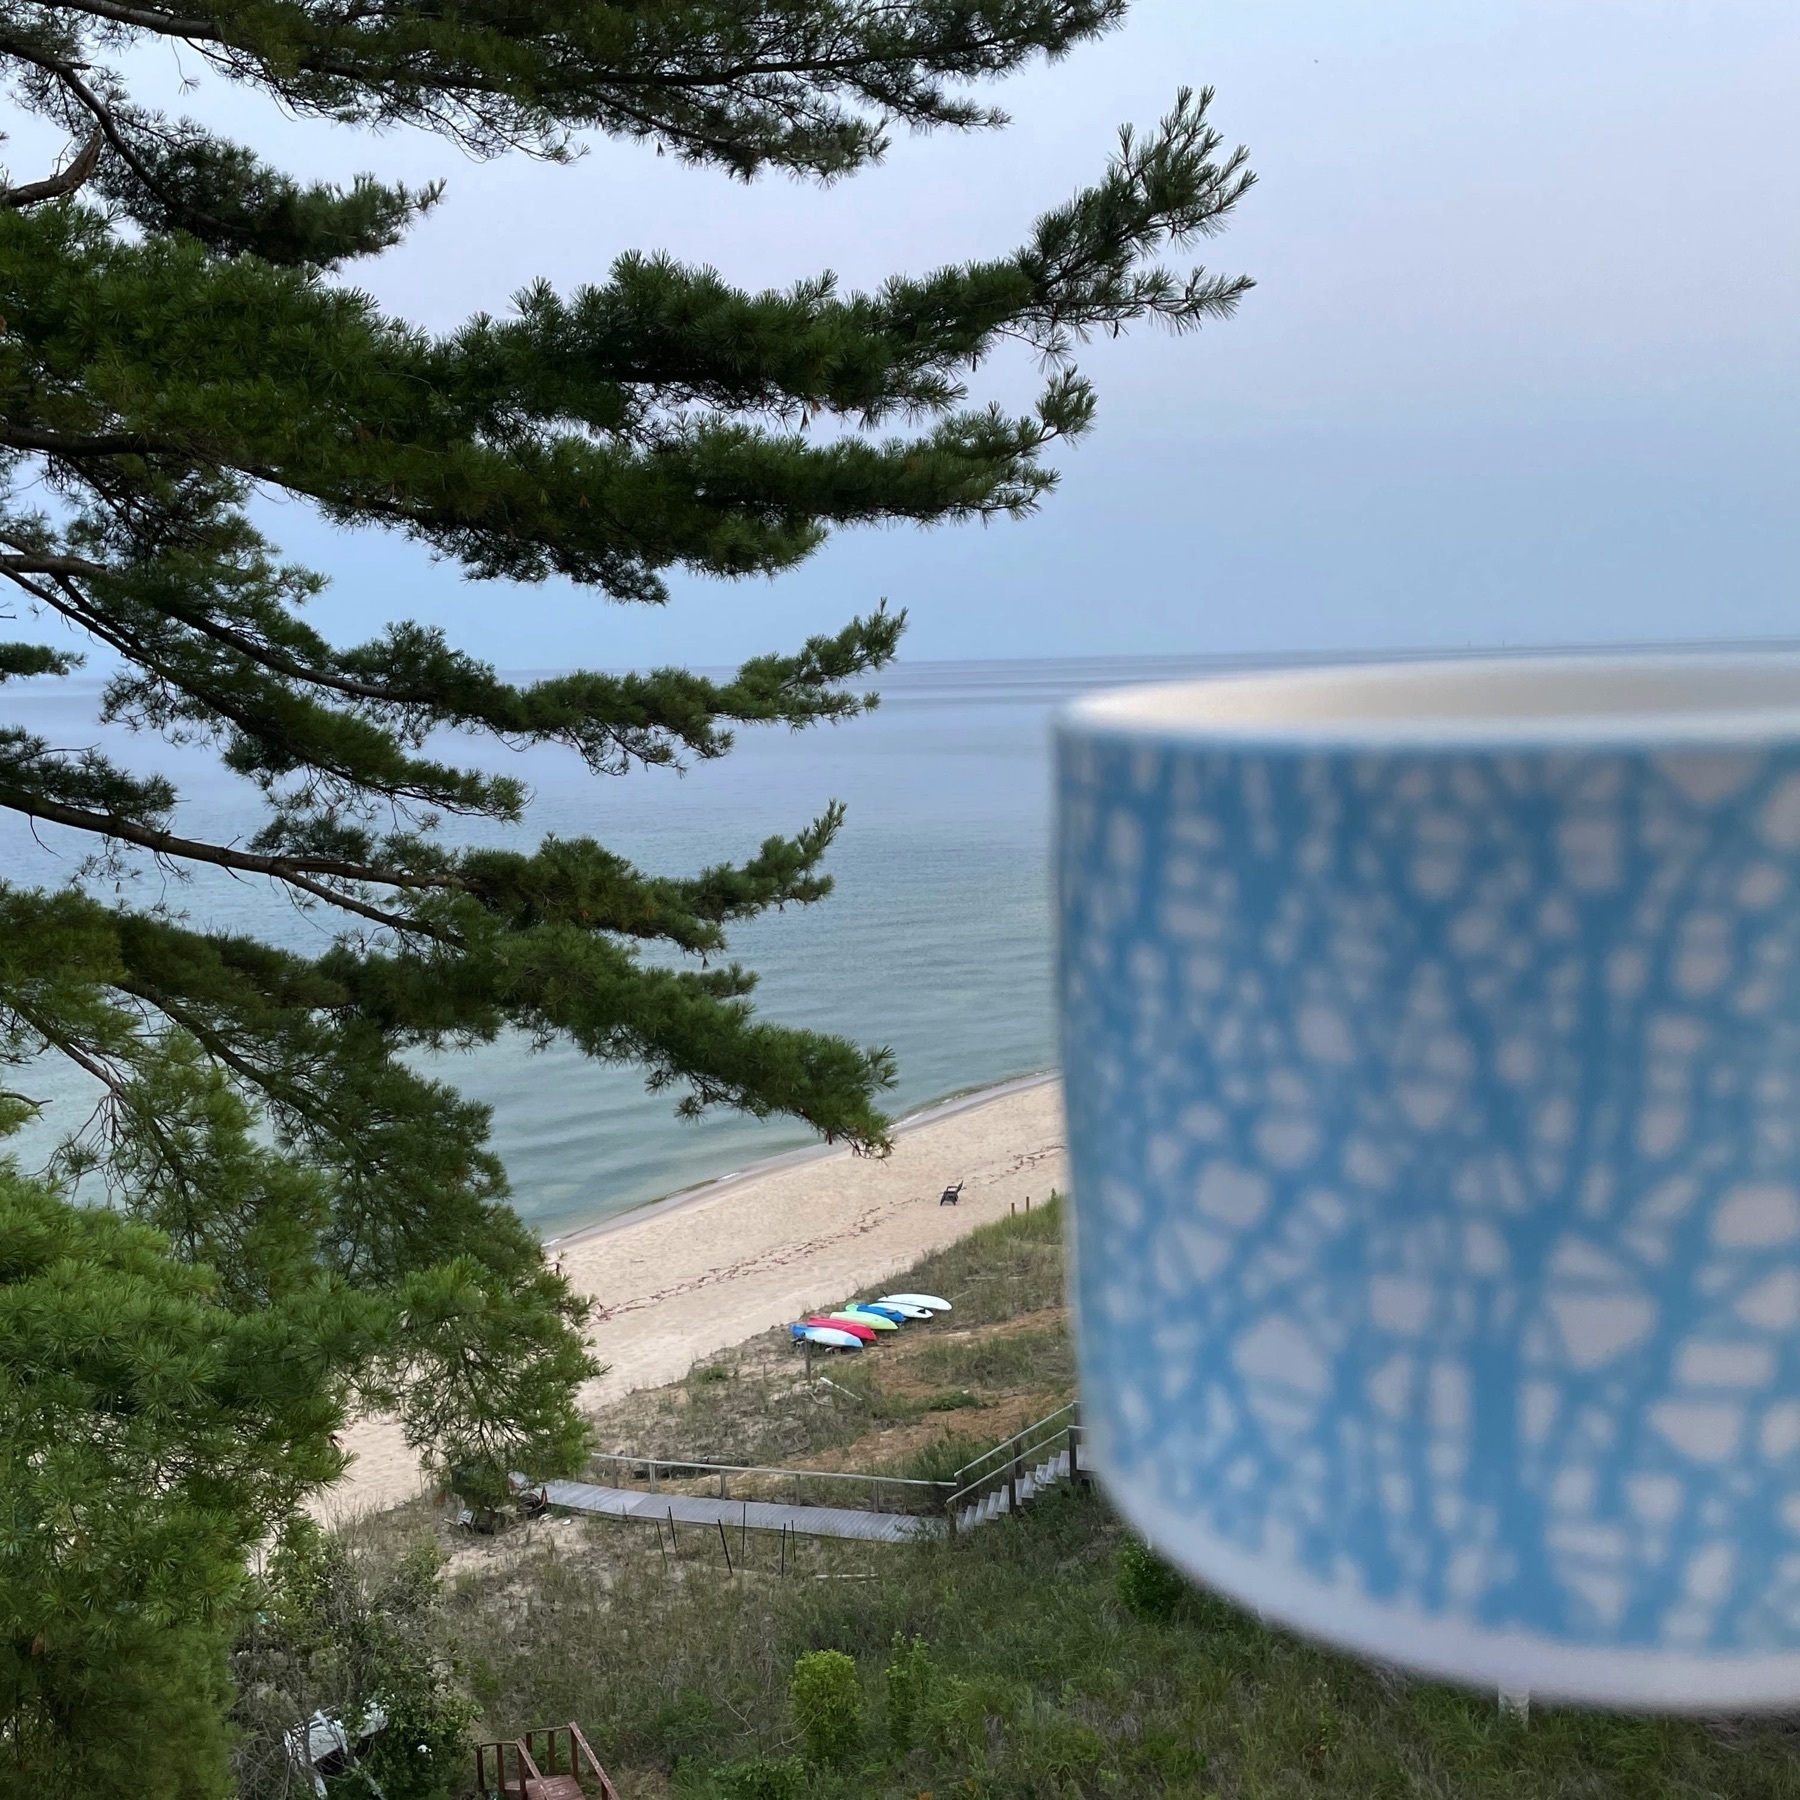 Coffee mug in foreground, Lake Michigan in background